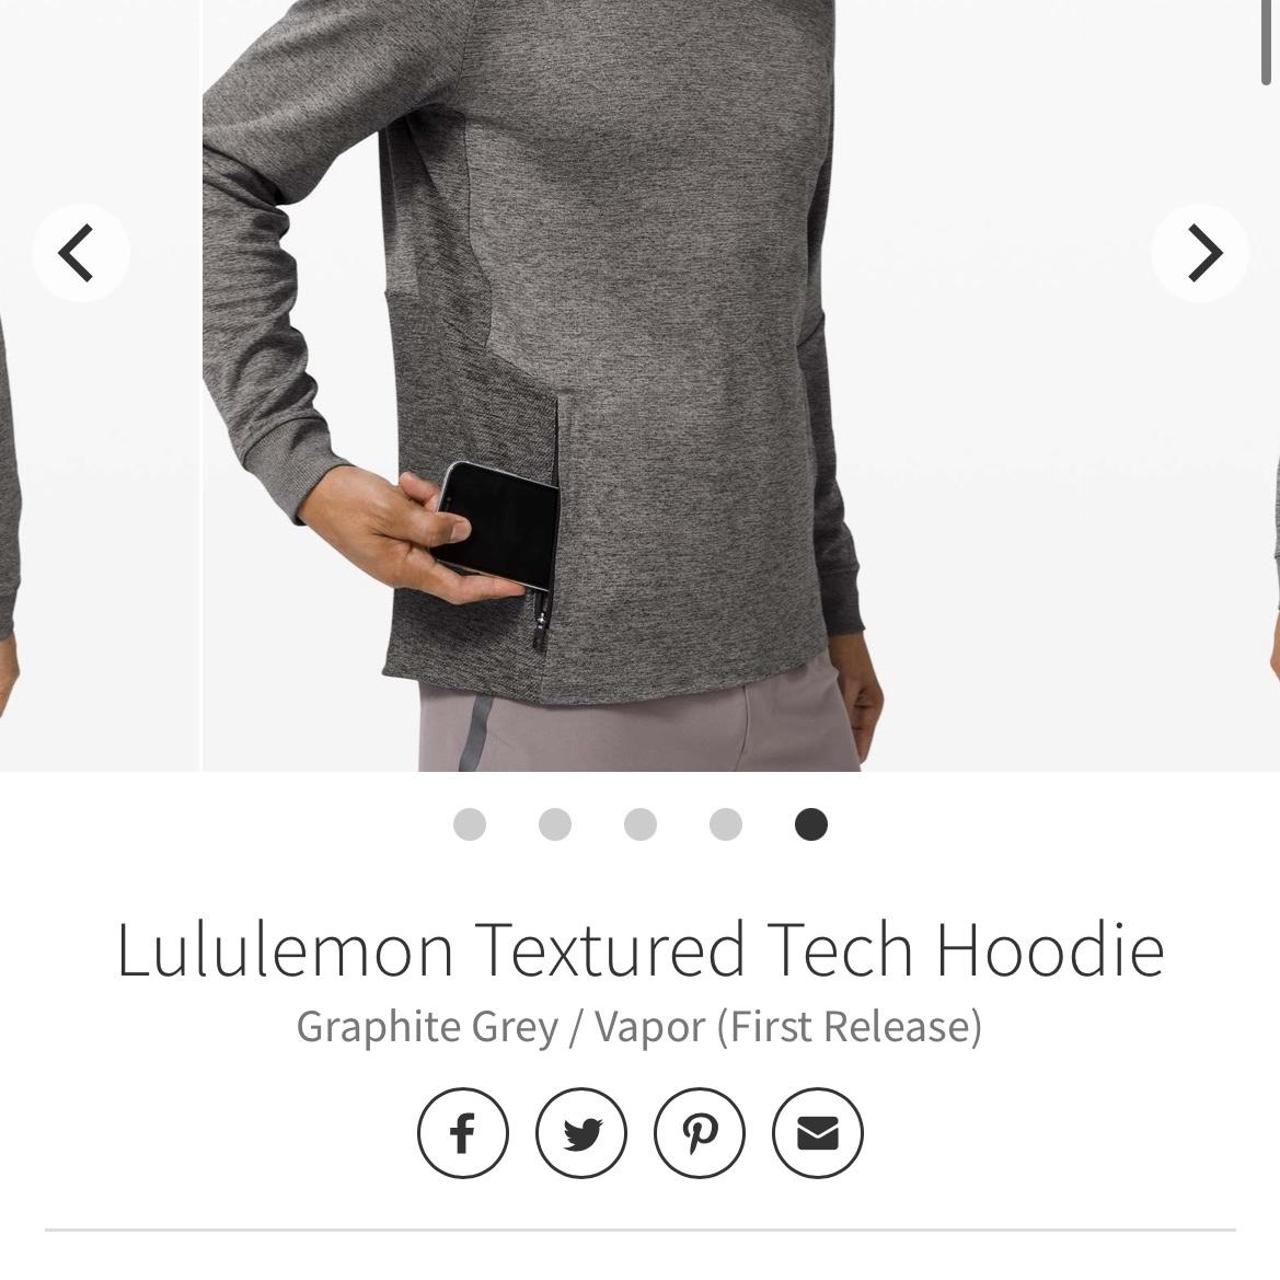 The Best Lululemon Hoodies and Sweatshirts To Buy - Graphite Grey / Vapor  Textured Tech Hoodie Mens